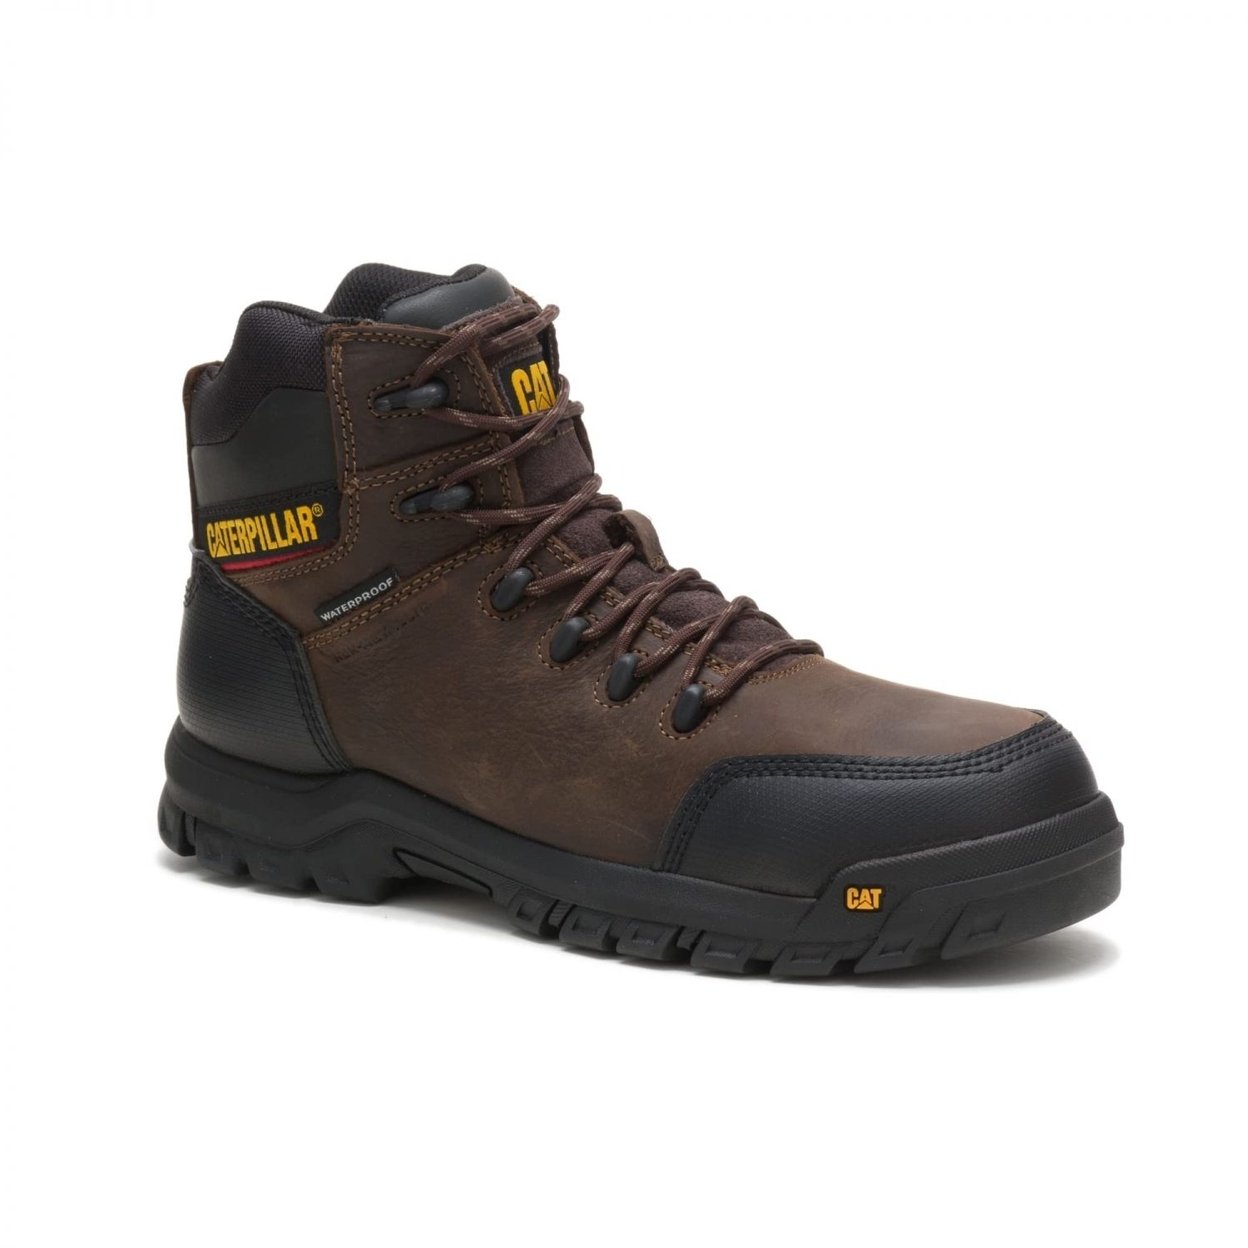 Cat Footwear Men's Resorption Composite Toe Waterproof Industrial Boot BLACK - BLACK, 8-W